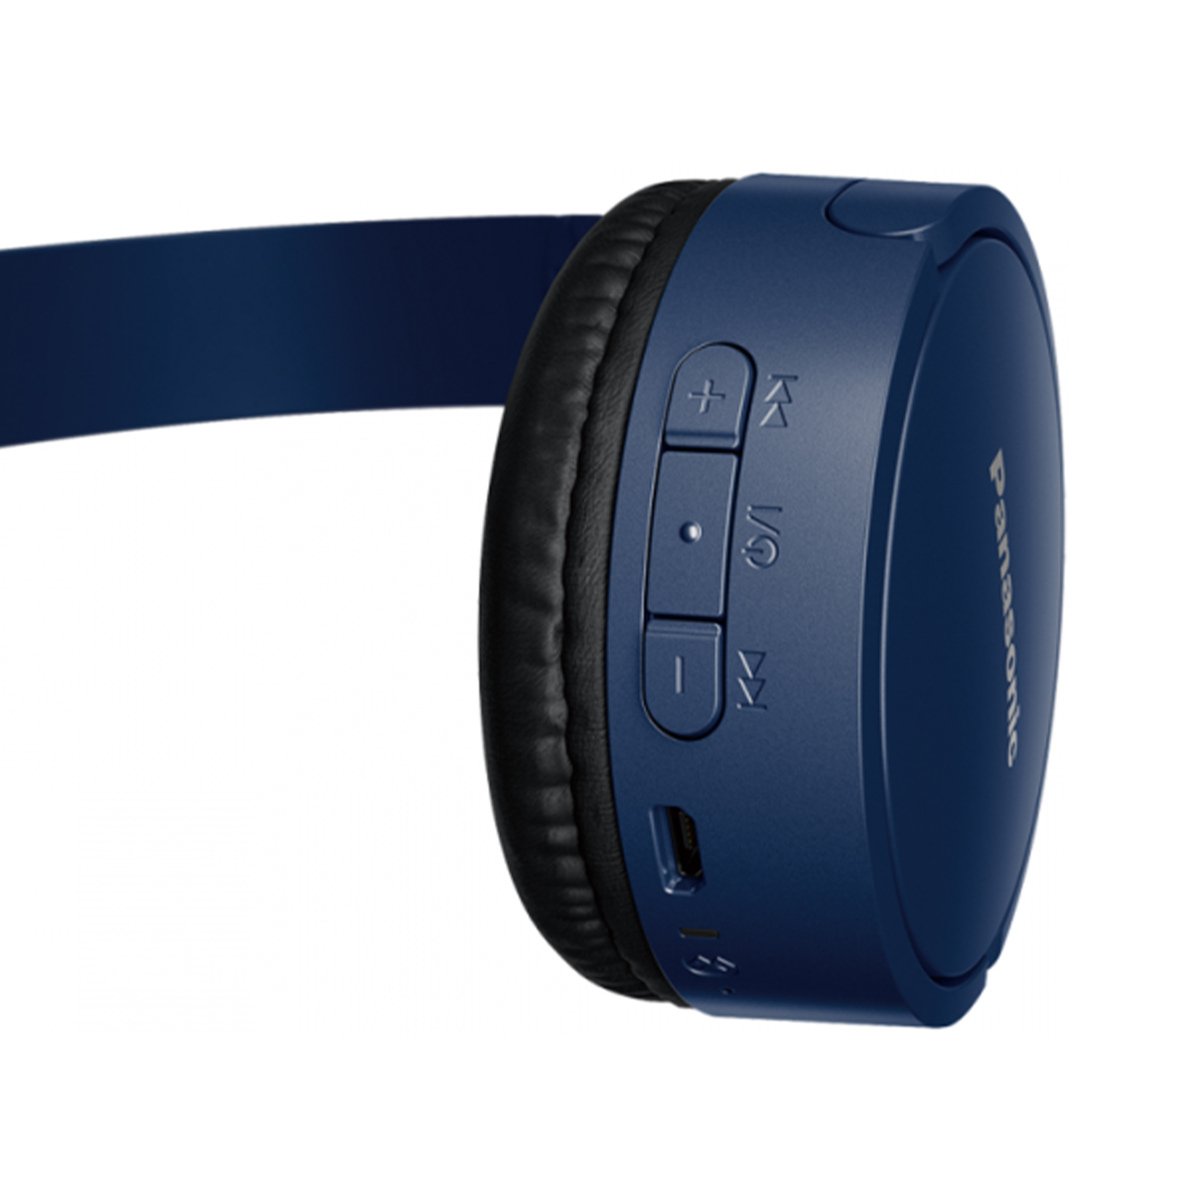 Panasonic Wireless headphones RB-HF420BG Blue